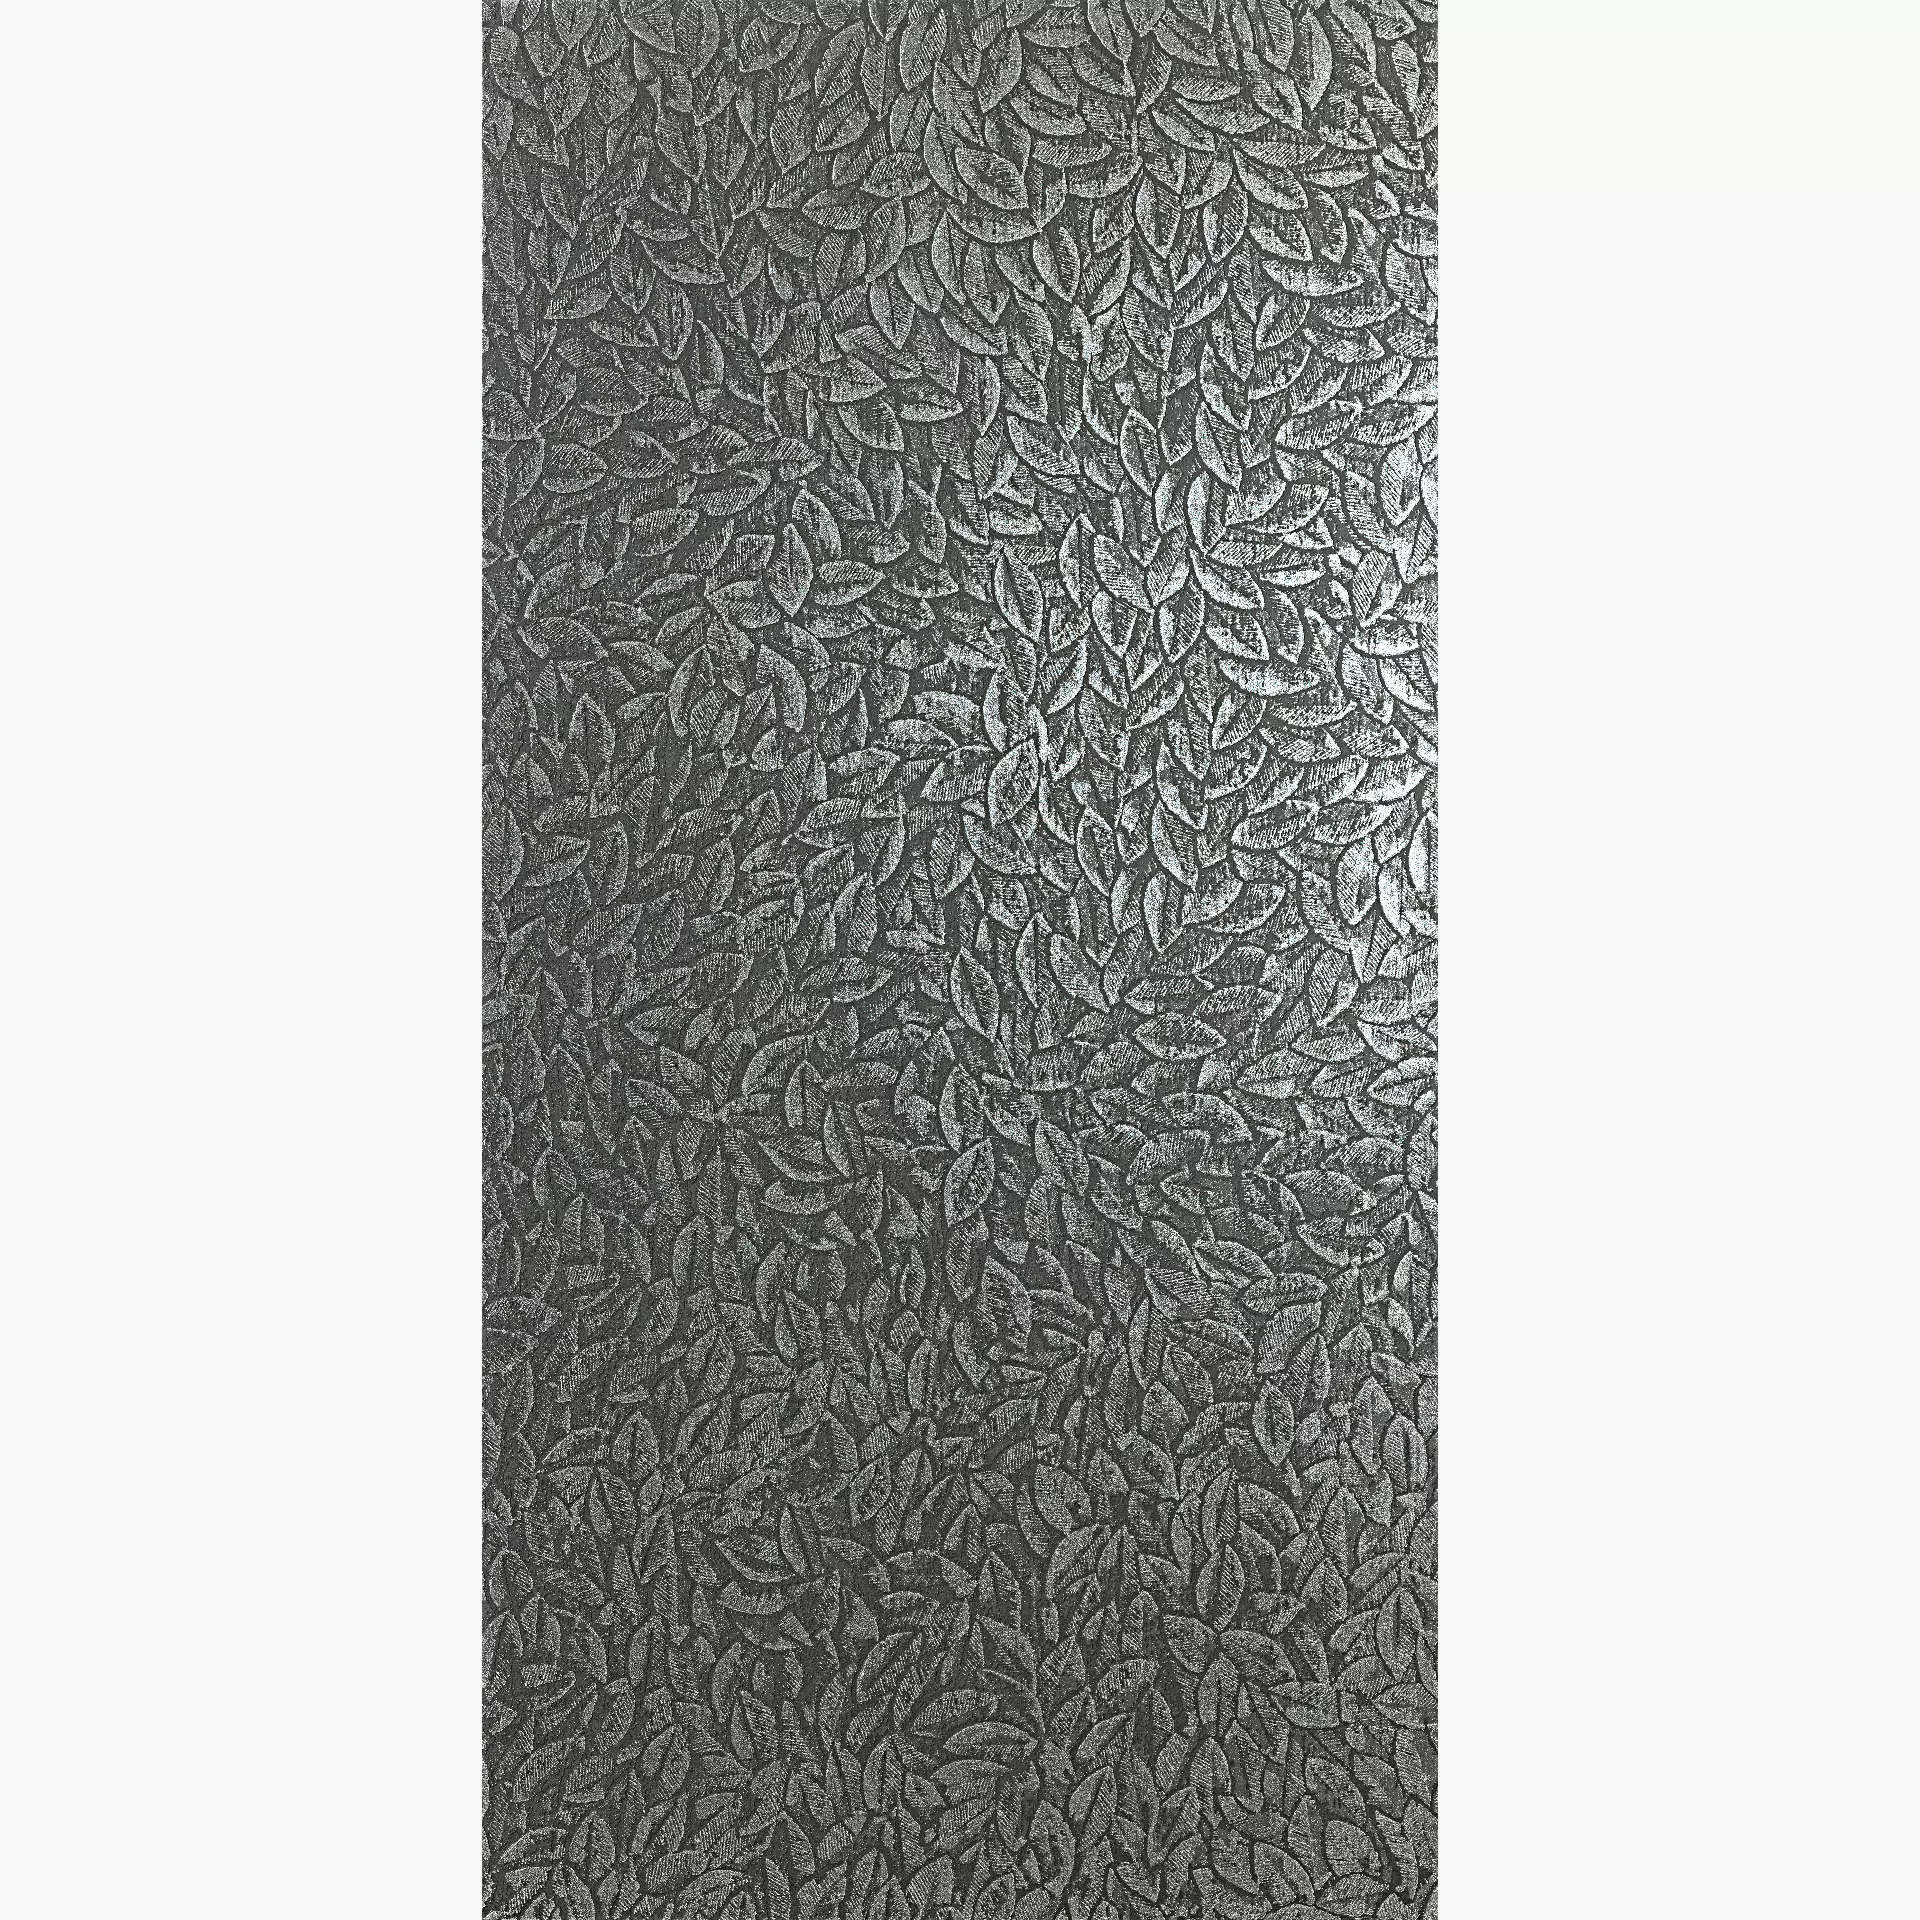 CIR Showall Foliage Silver Naturale Wall 24 1081880 60x120cm rectified 9,5mm